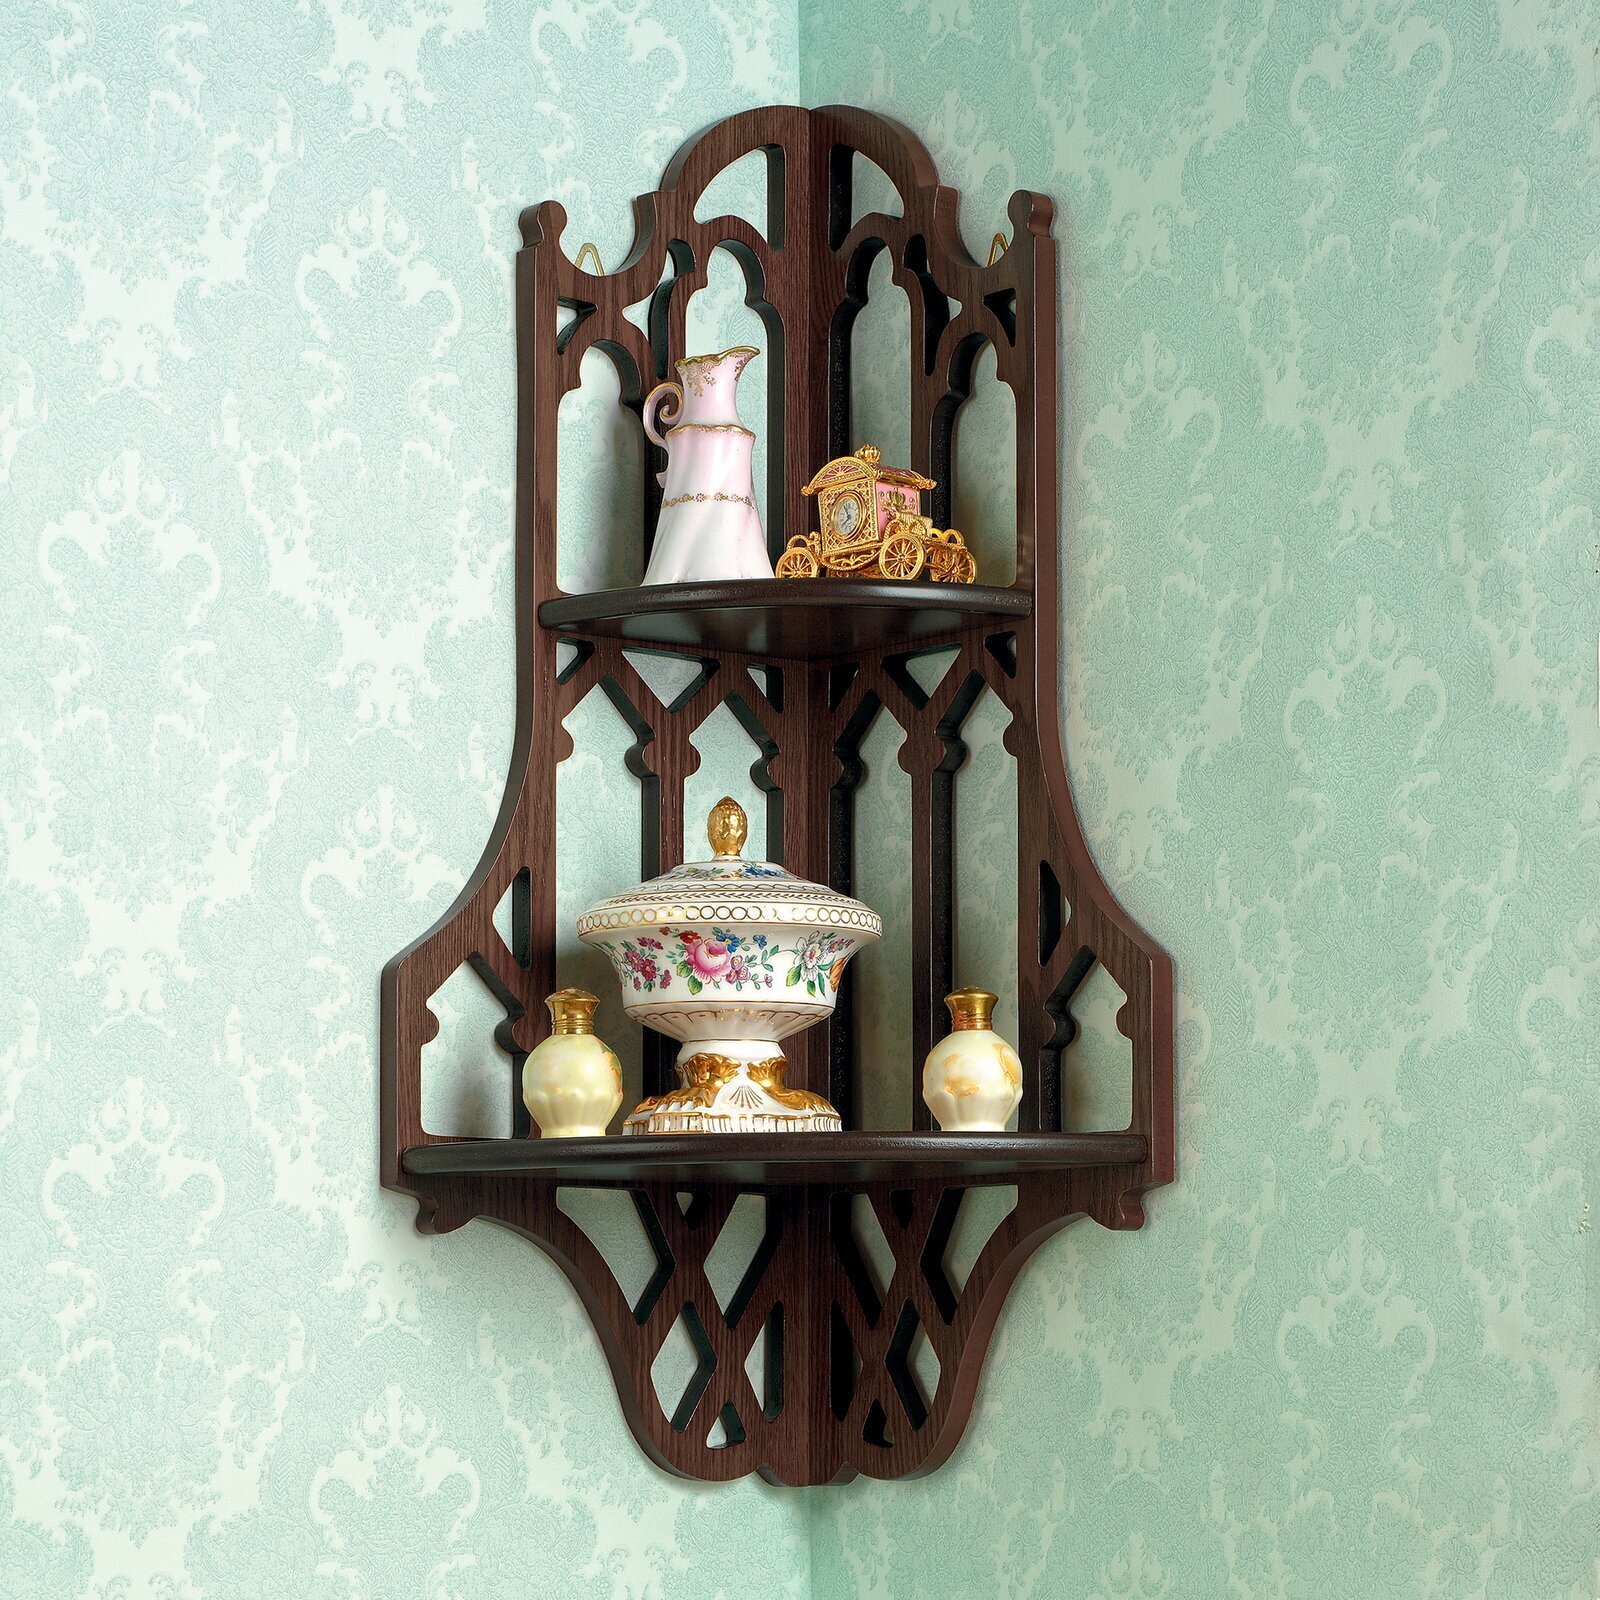 Gothic style wall mounted corner shelf 